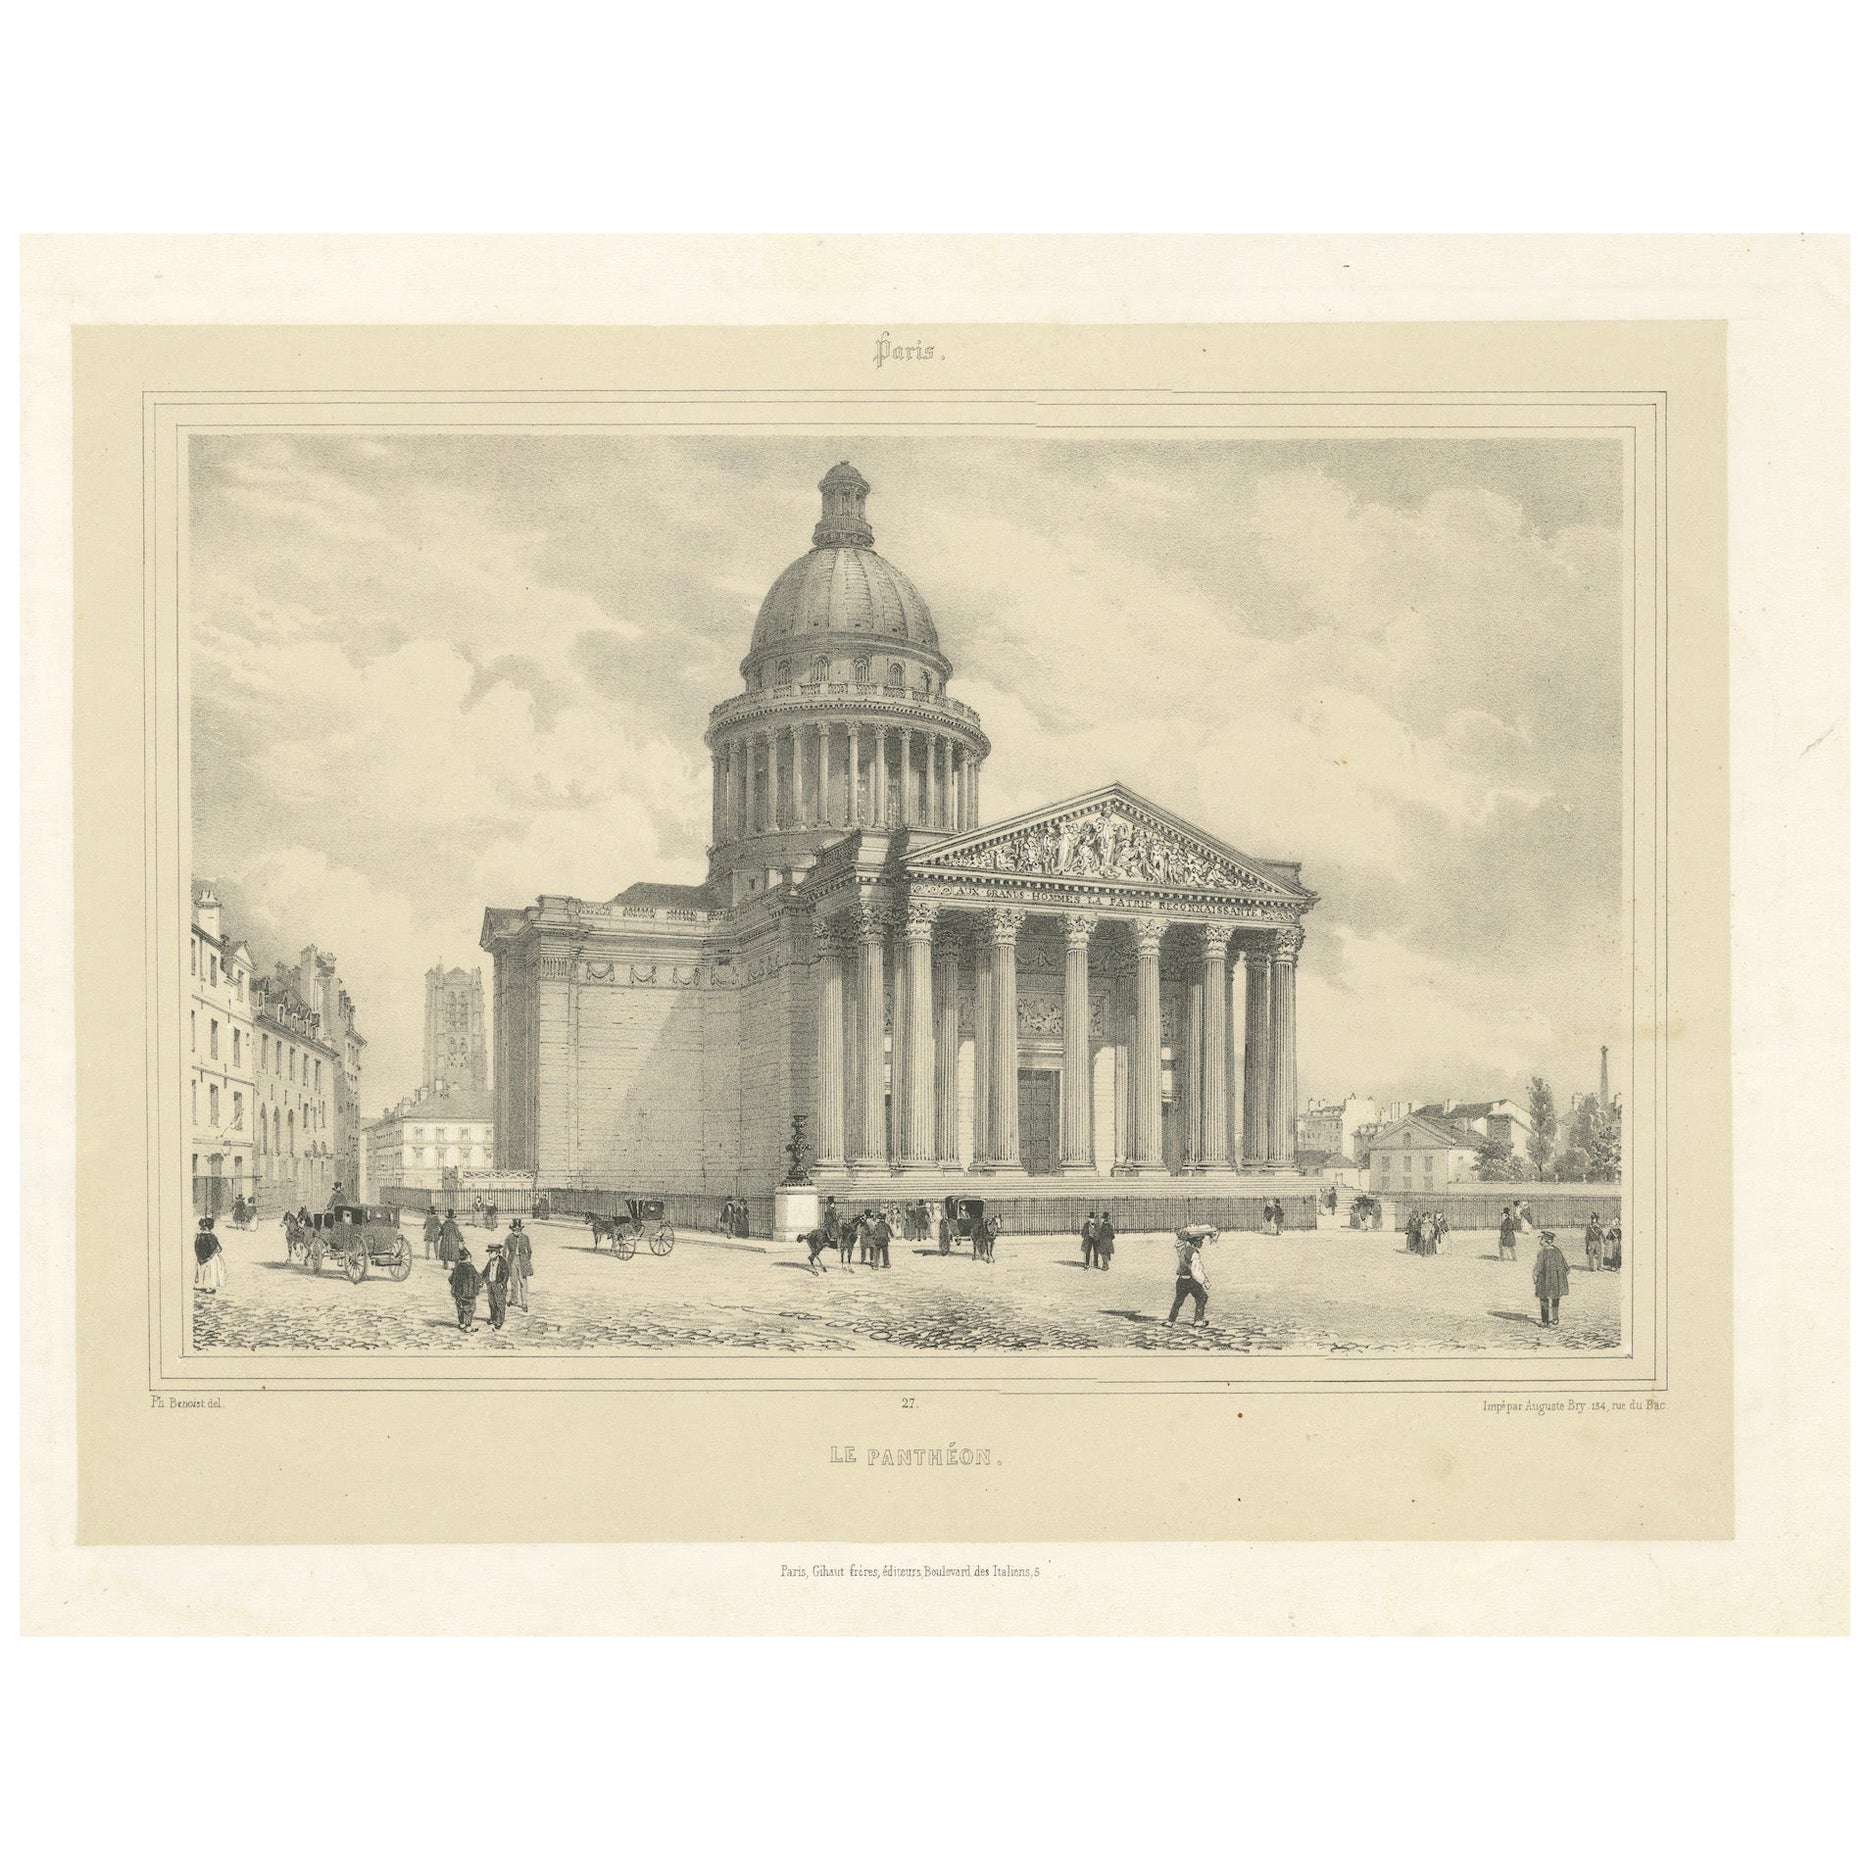 Decorative Engraved Panthéon Paris in the 1800s by Bry & Benoist